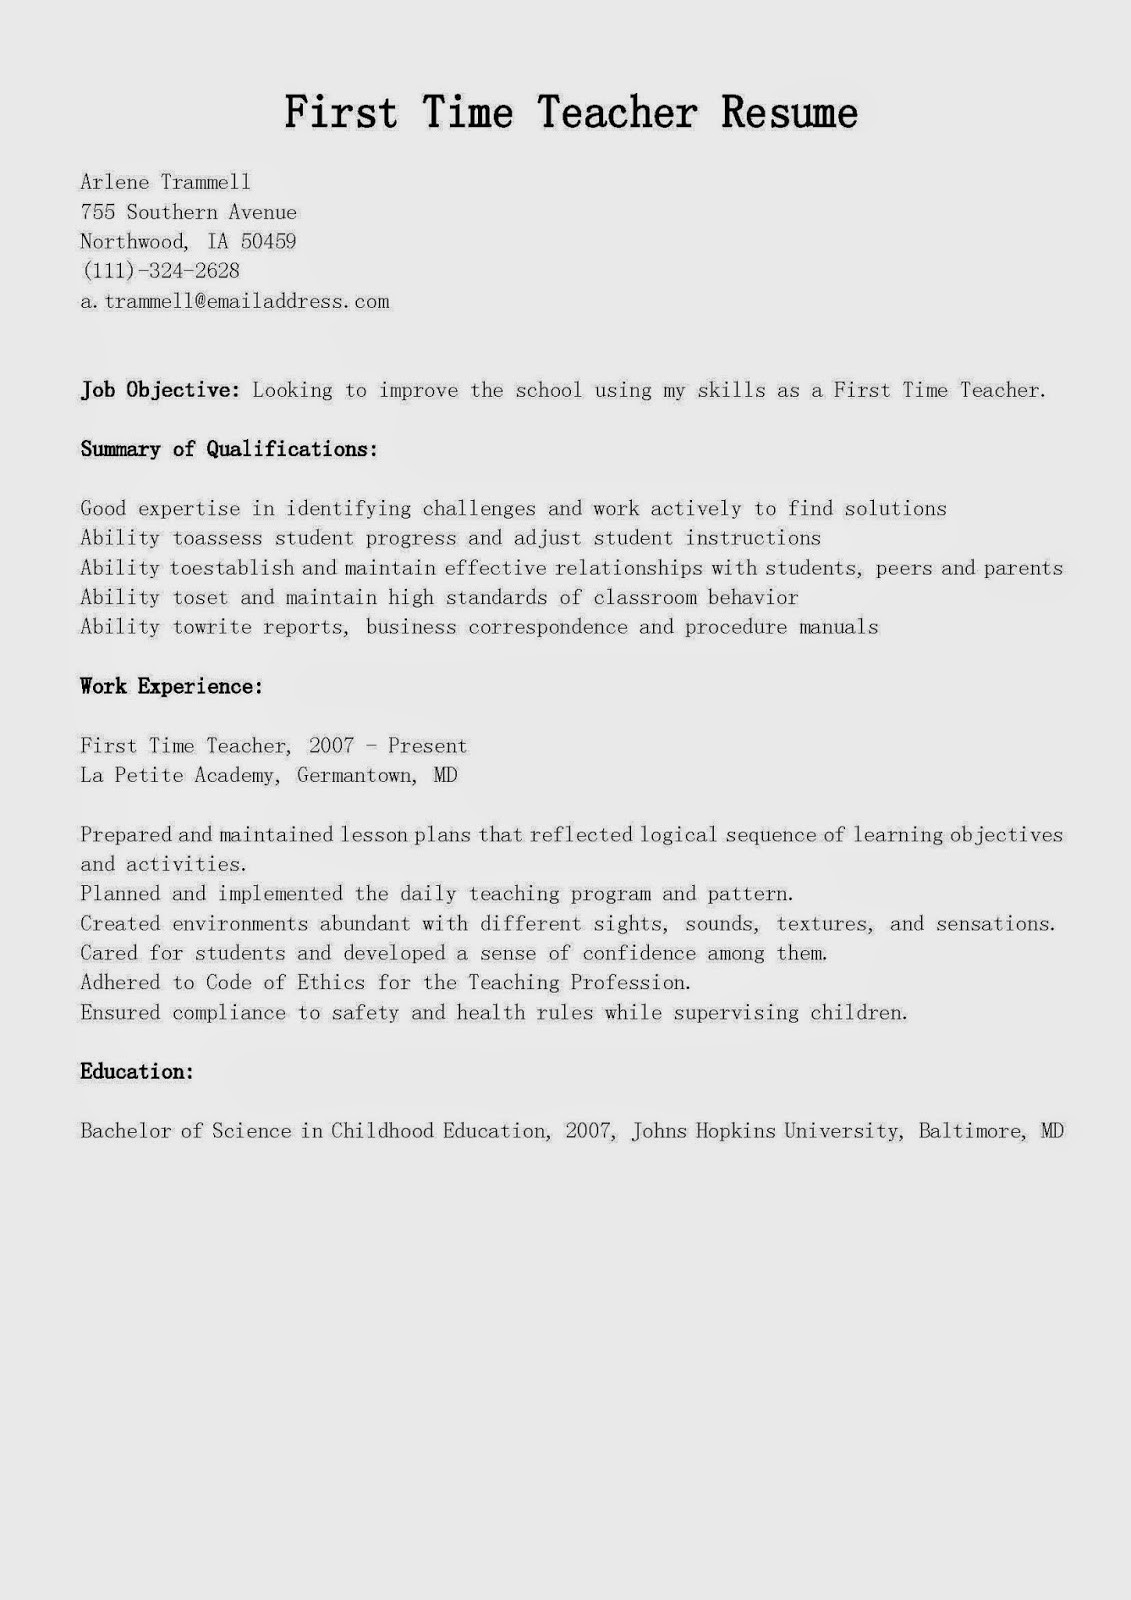 job application job seeker resume sample